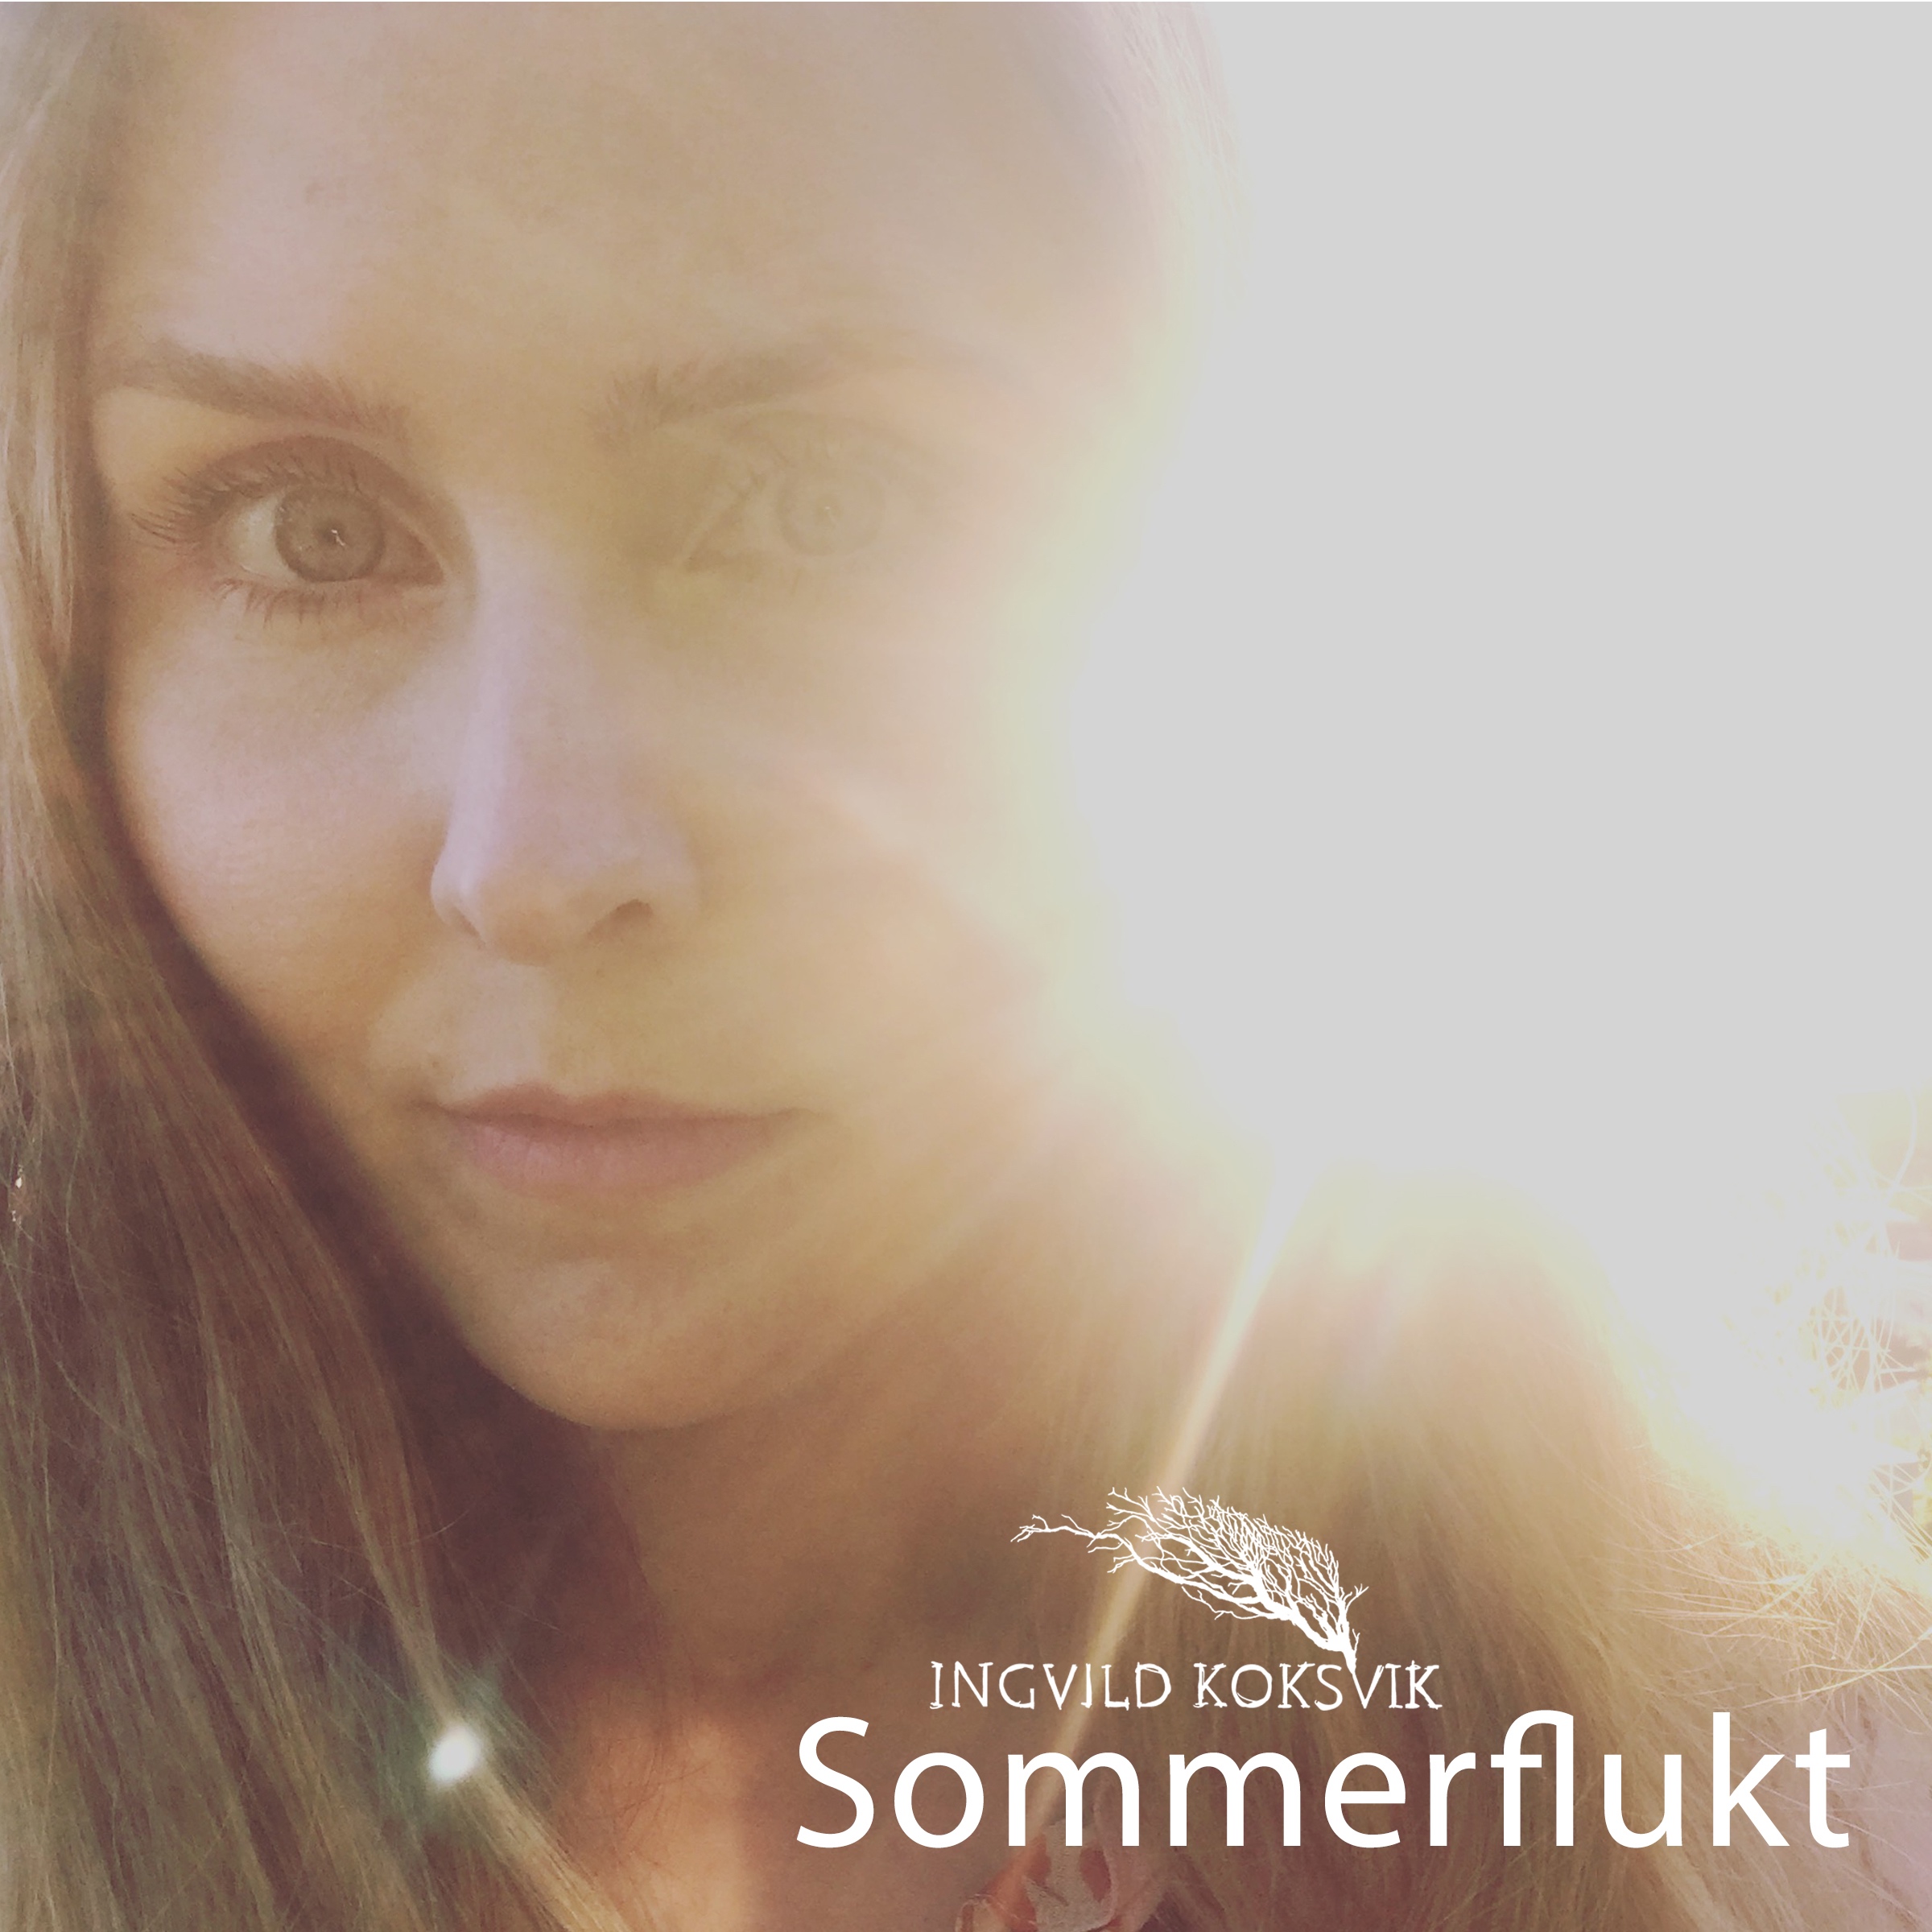 Sommerflukt (single) - Ingvild Koksvik